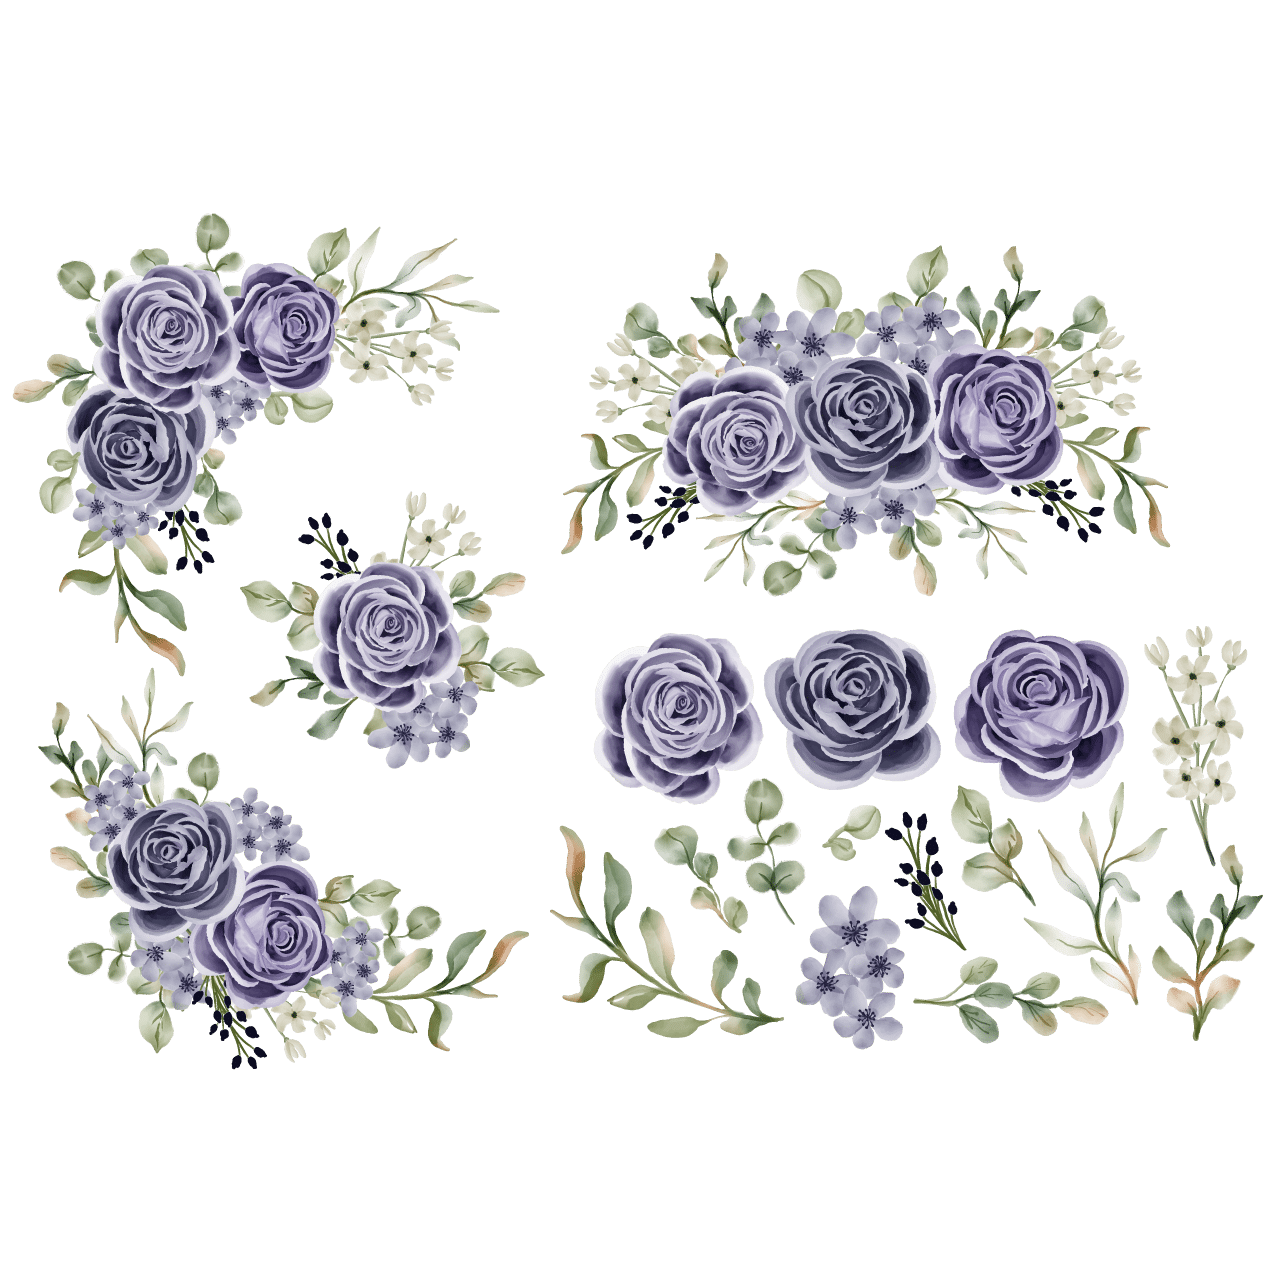 Flower rose indigo arrangement with flower isolated leaf flower isolated